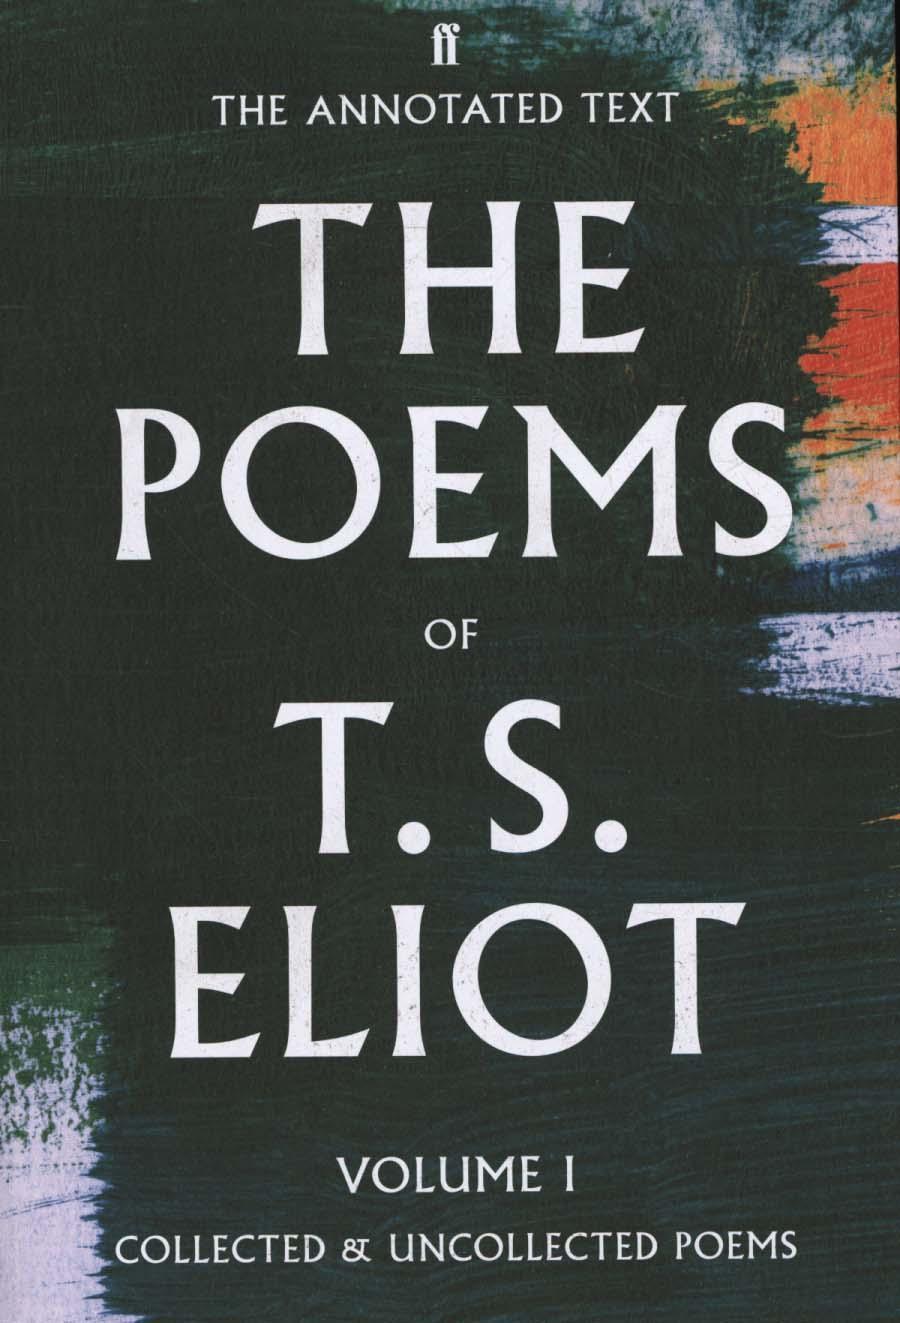 Poems of T. S. Eliot Volume I